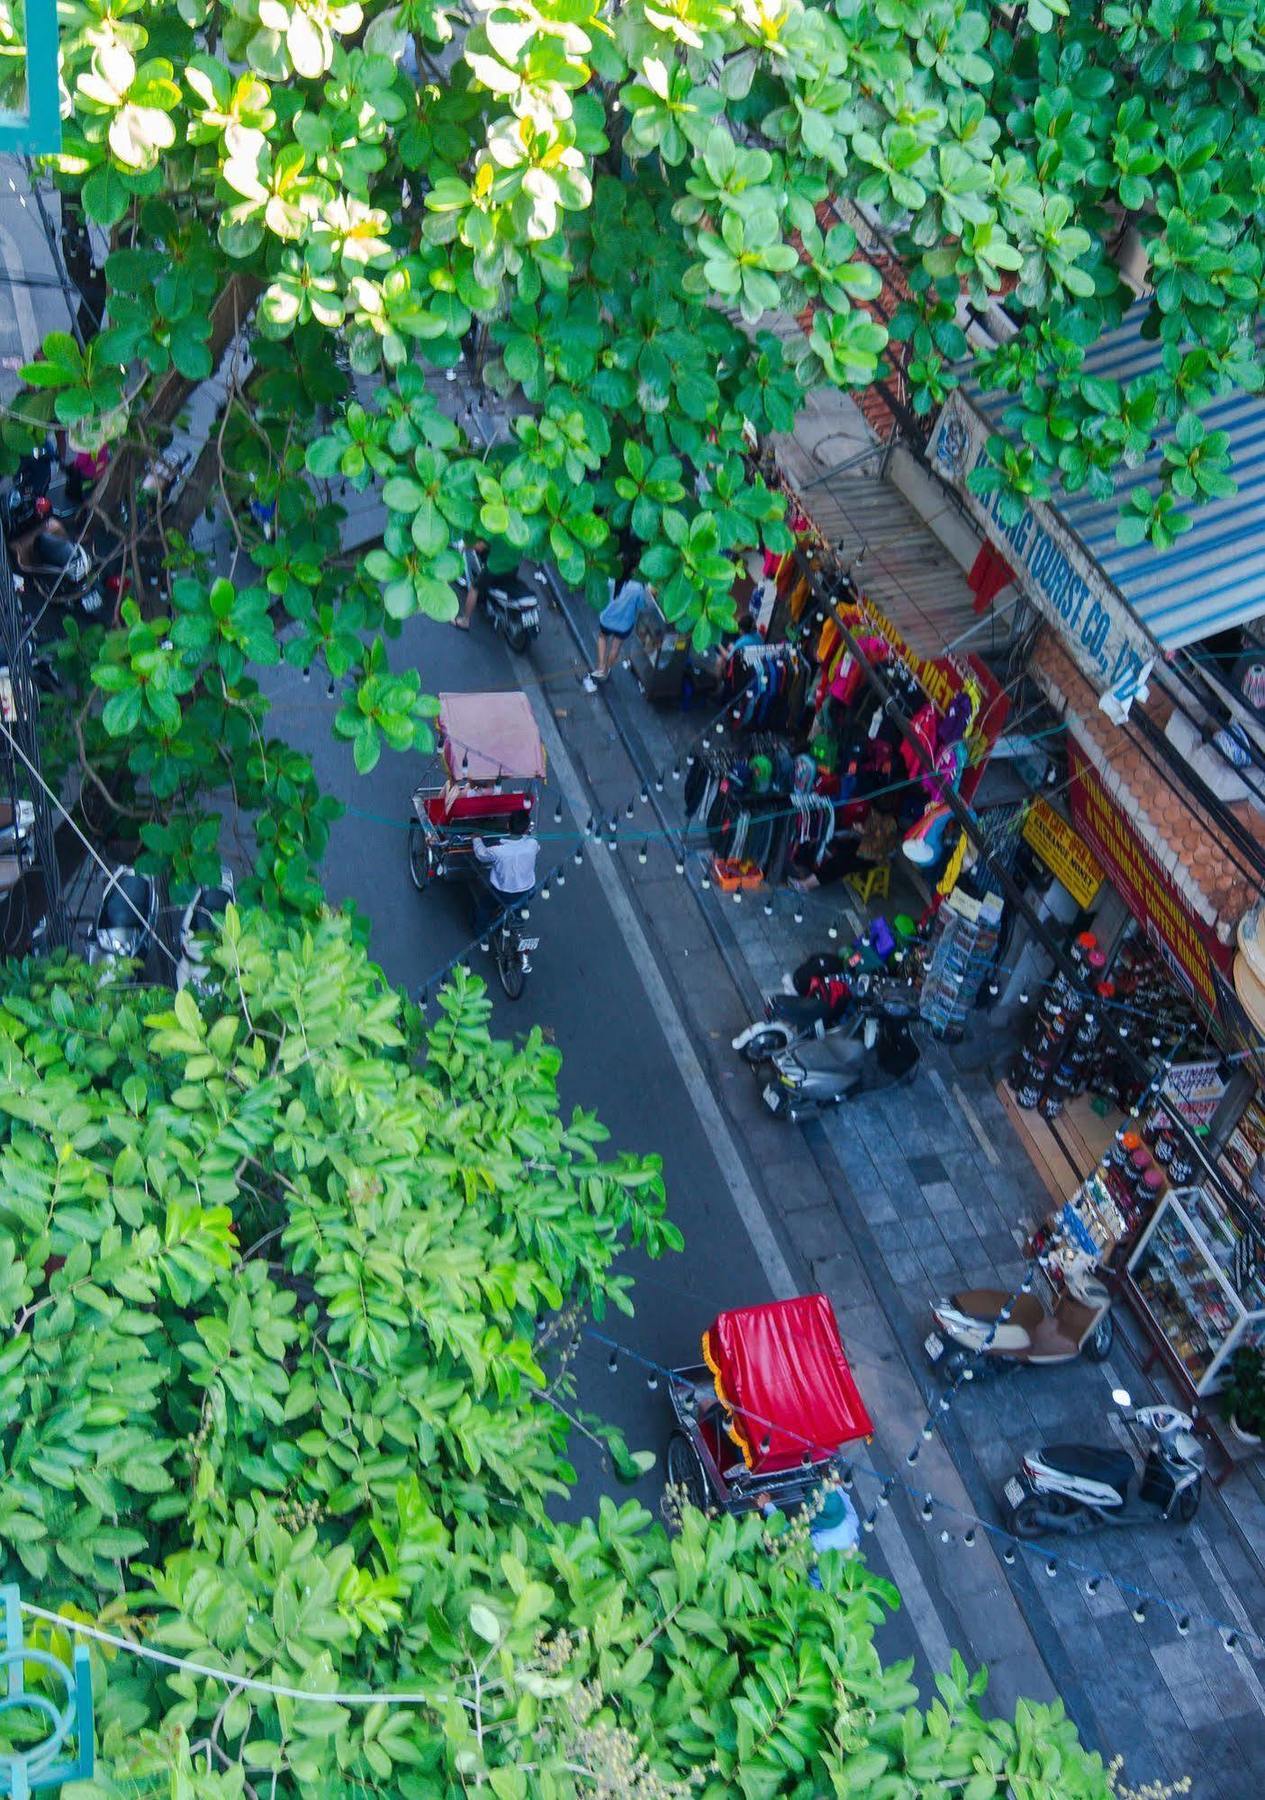 Hanoi Endless Hotel 外观 照片